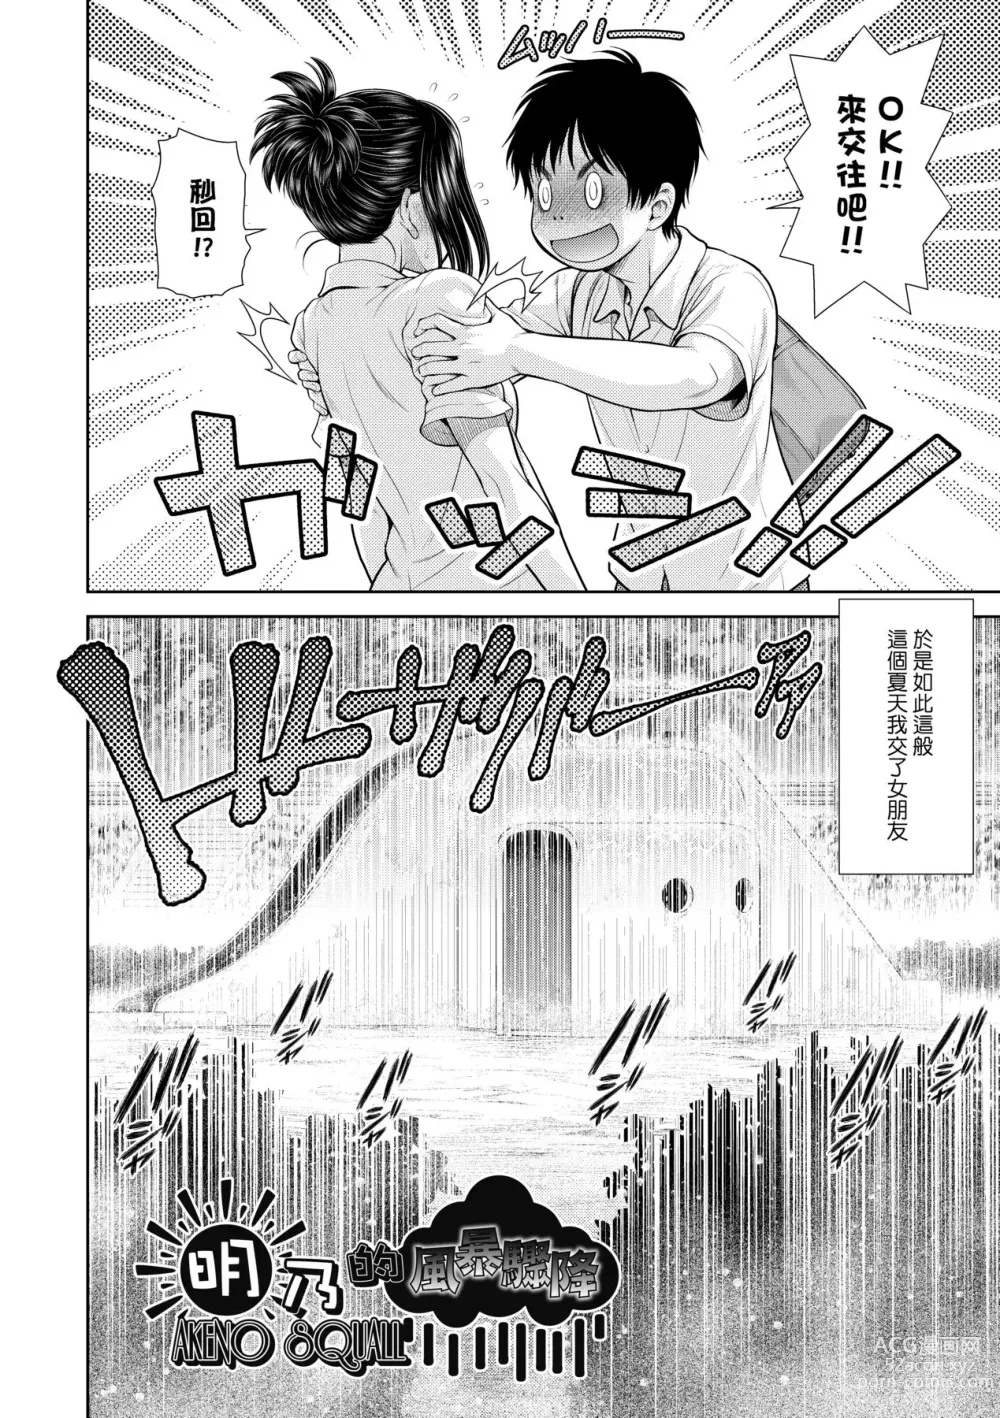 Page 25 of manga Uezatchiizu (decensored)